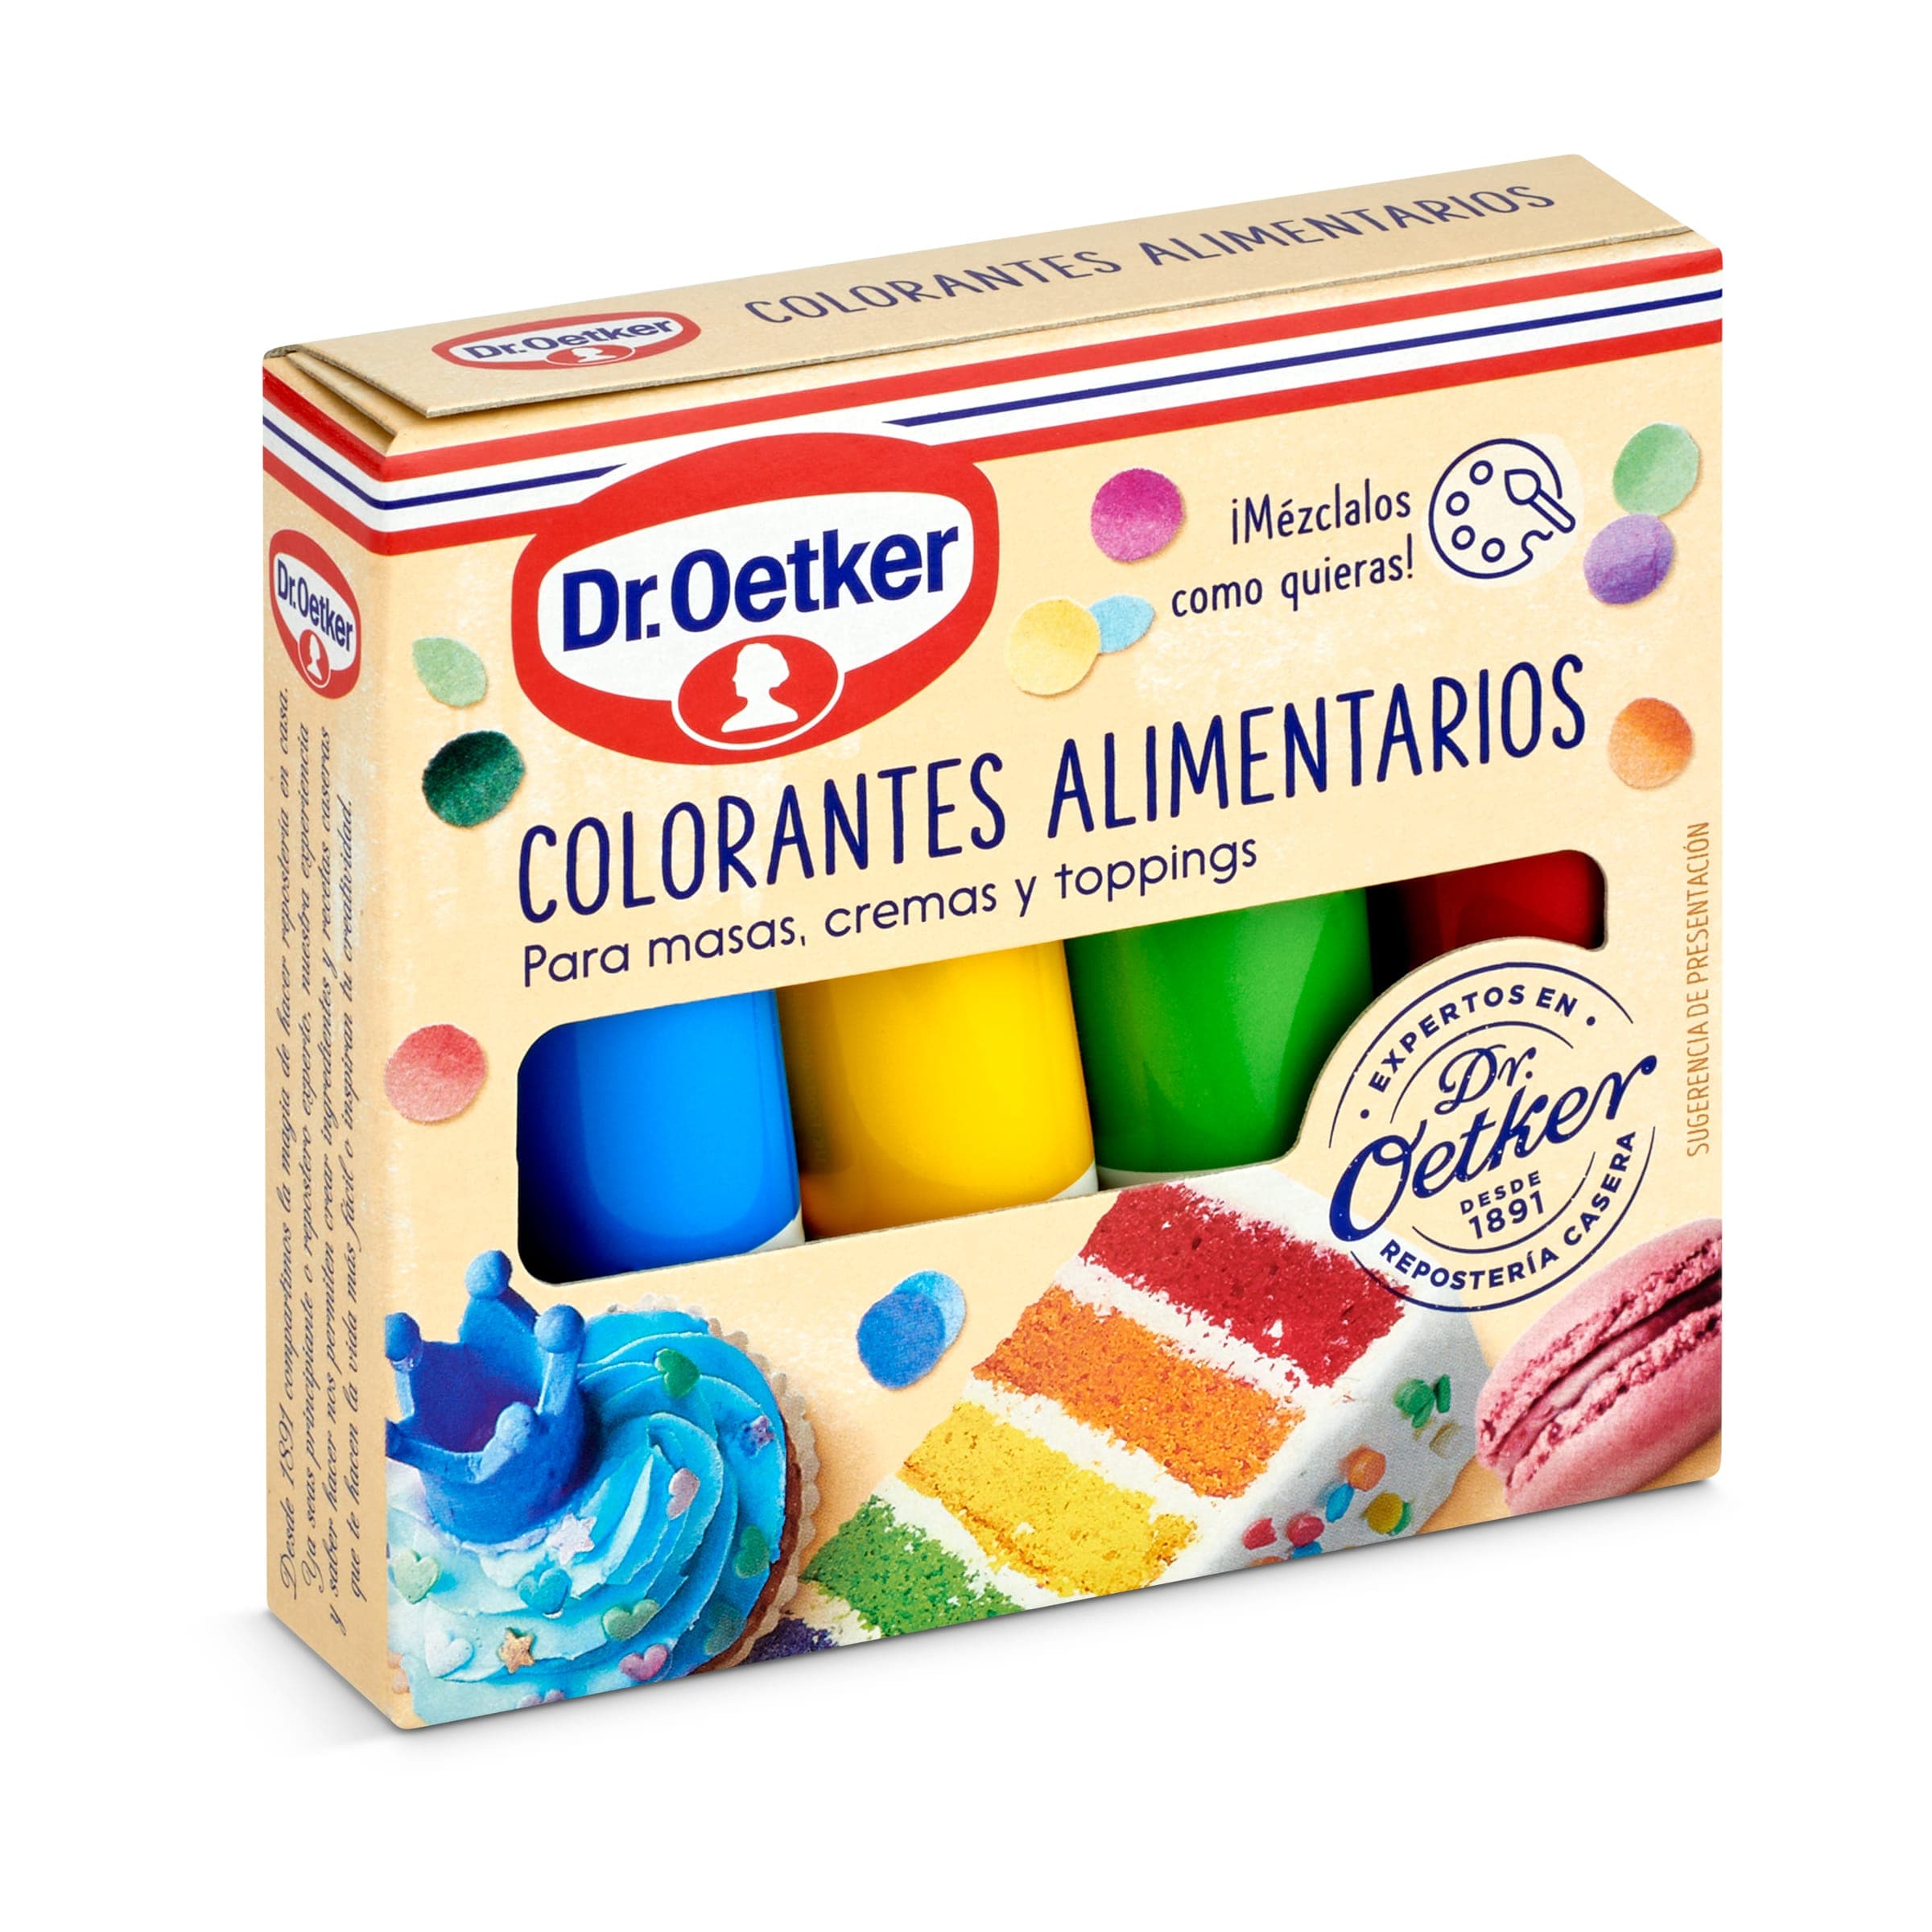 Colorantes alimentarios Dr. Oetker caja 40 g - Supermercados DIA